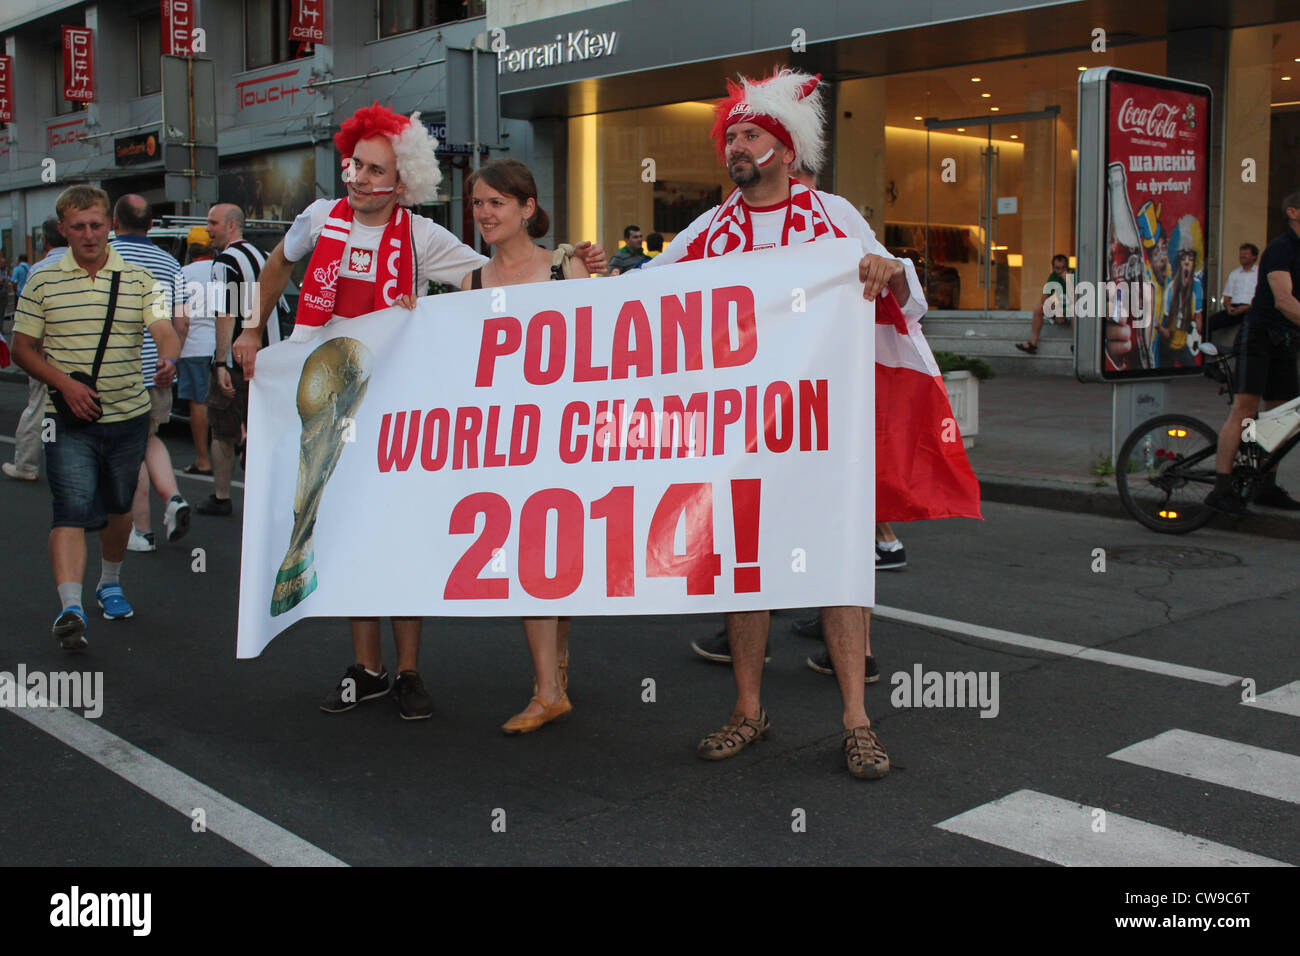 Polen-Fans-Banner "Polen Welt Chapmion 2014". Endgültige. Kiew, Ukraine, Fußball-Europameisterschaft 2012 Stockfoto